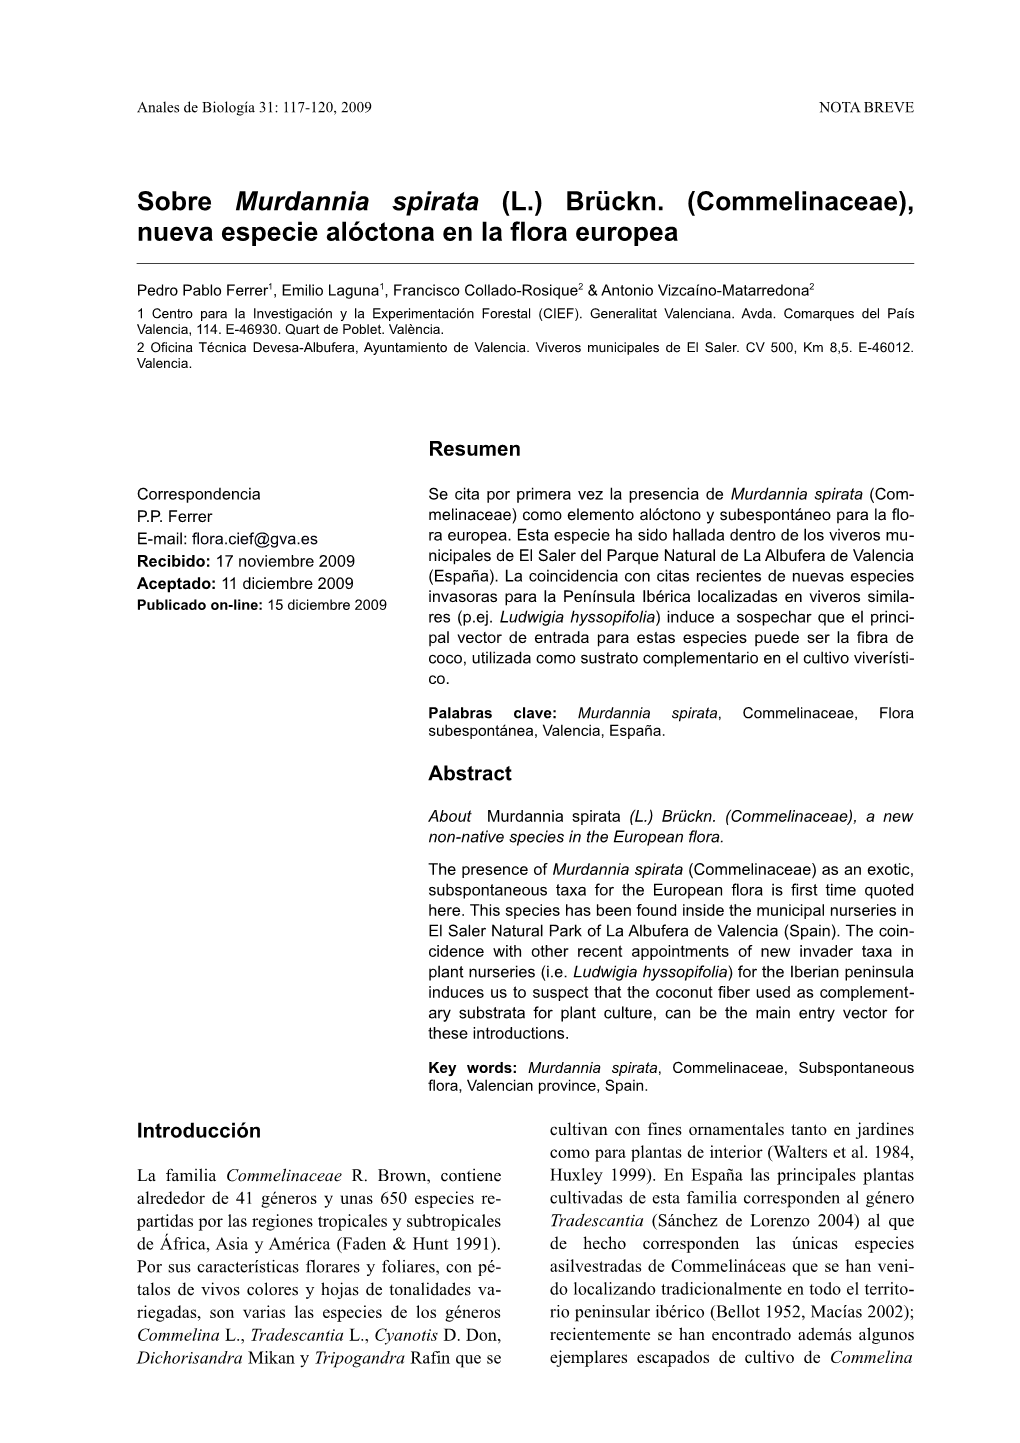 Sobre Murdannia Spirata (L.) Brückn. (Commelinaceae), Nueva Especie Alóctona En La Flora Europea